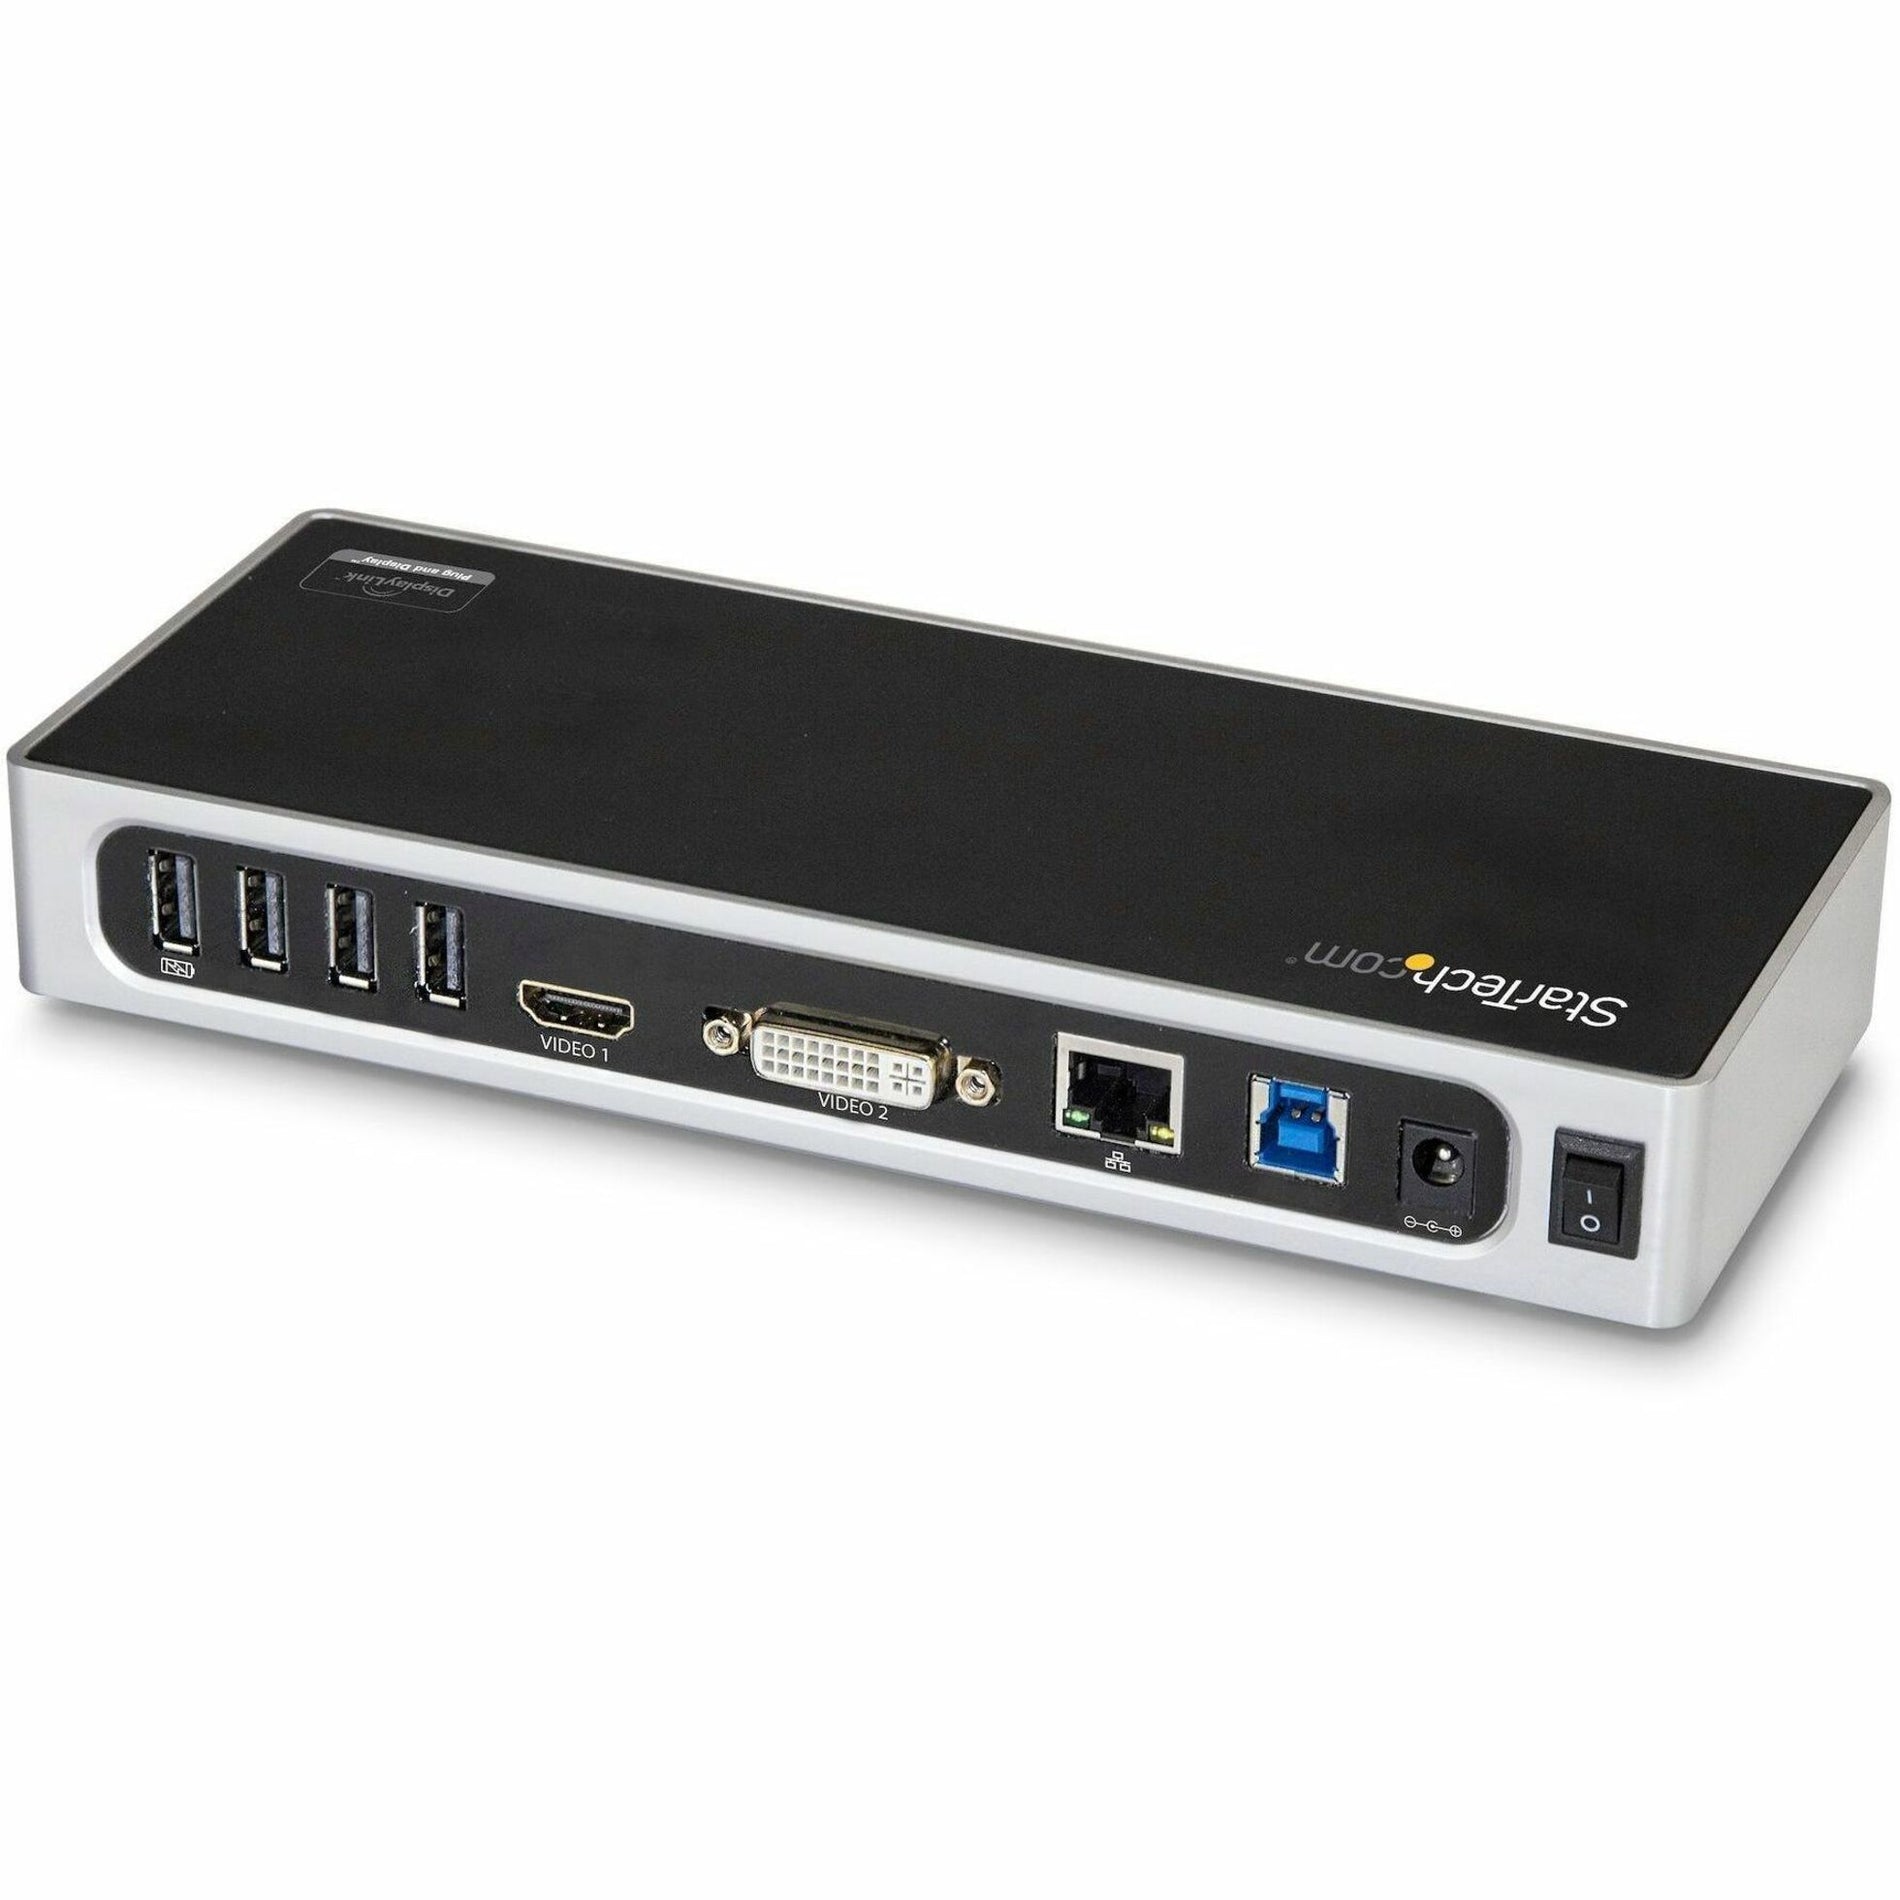 StarTech.com DK30ADD USB 3.0 Dual-Monitor Docking Station - HDMI and DVI / VGA, Laptop Docking Station - USB to HDMI, Port Replicator - USB 3.0 Dock